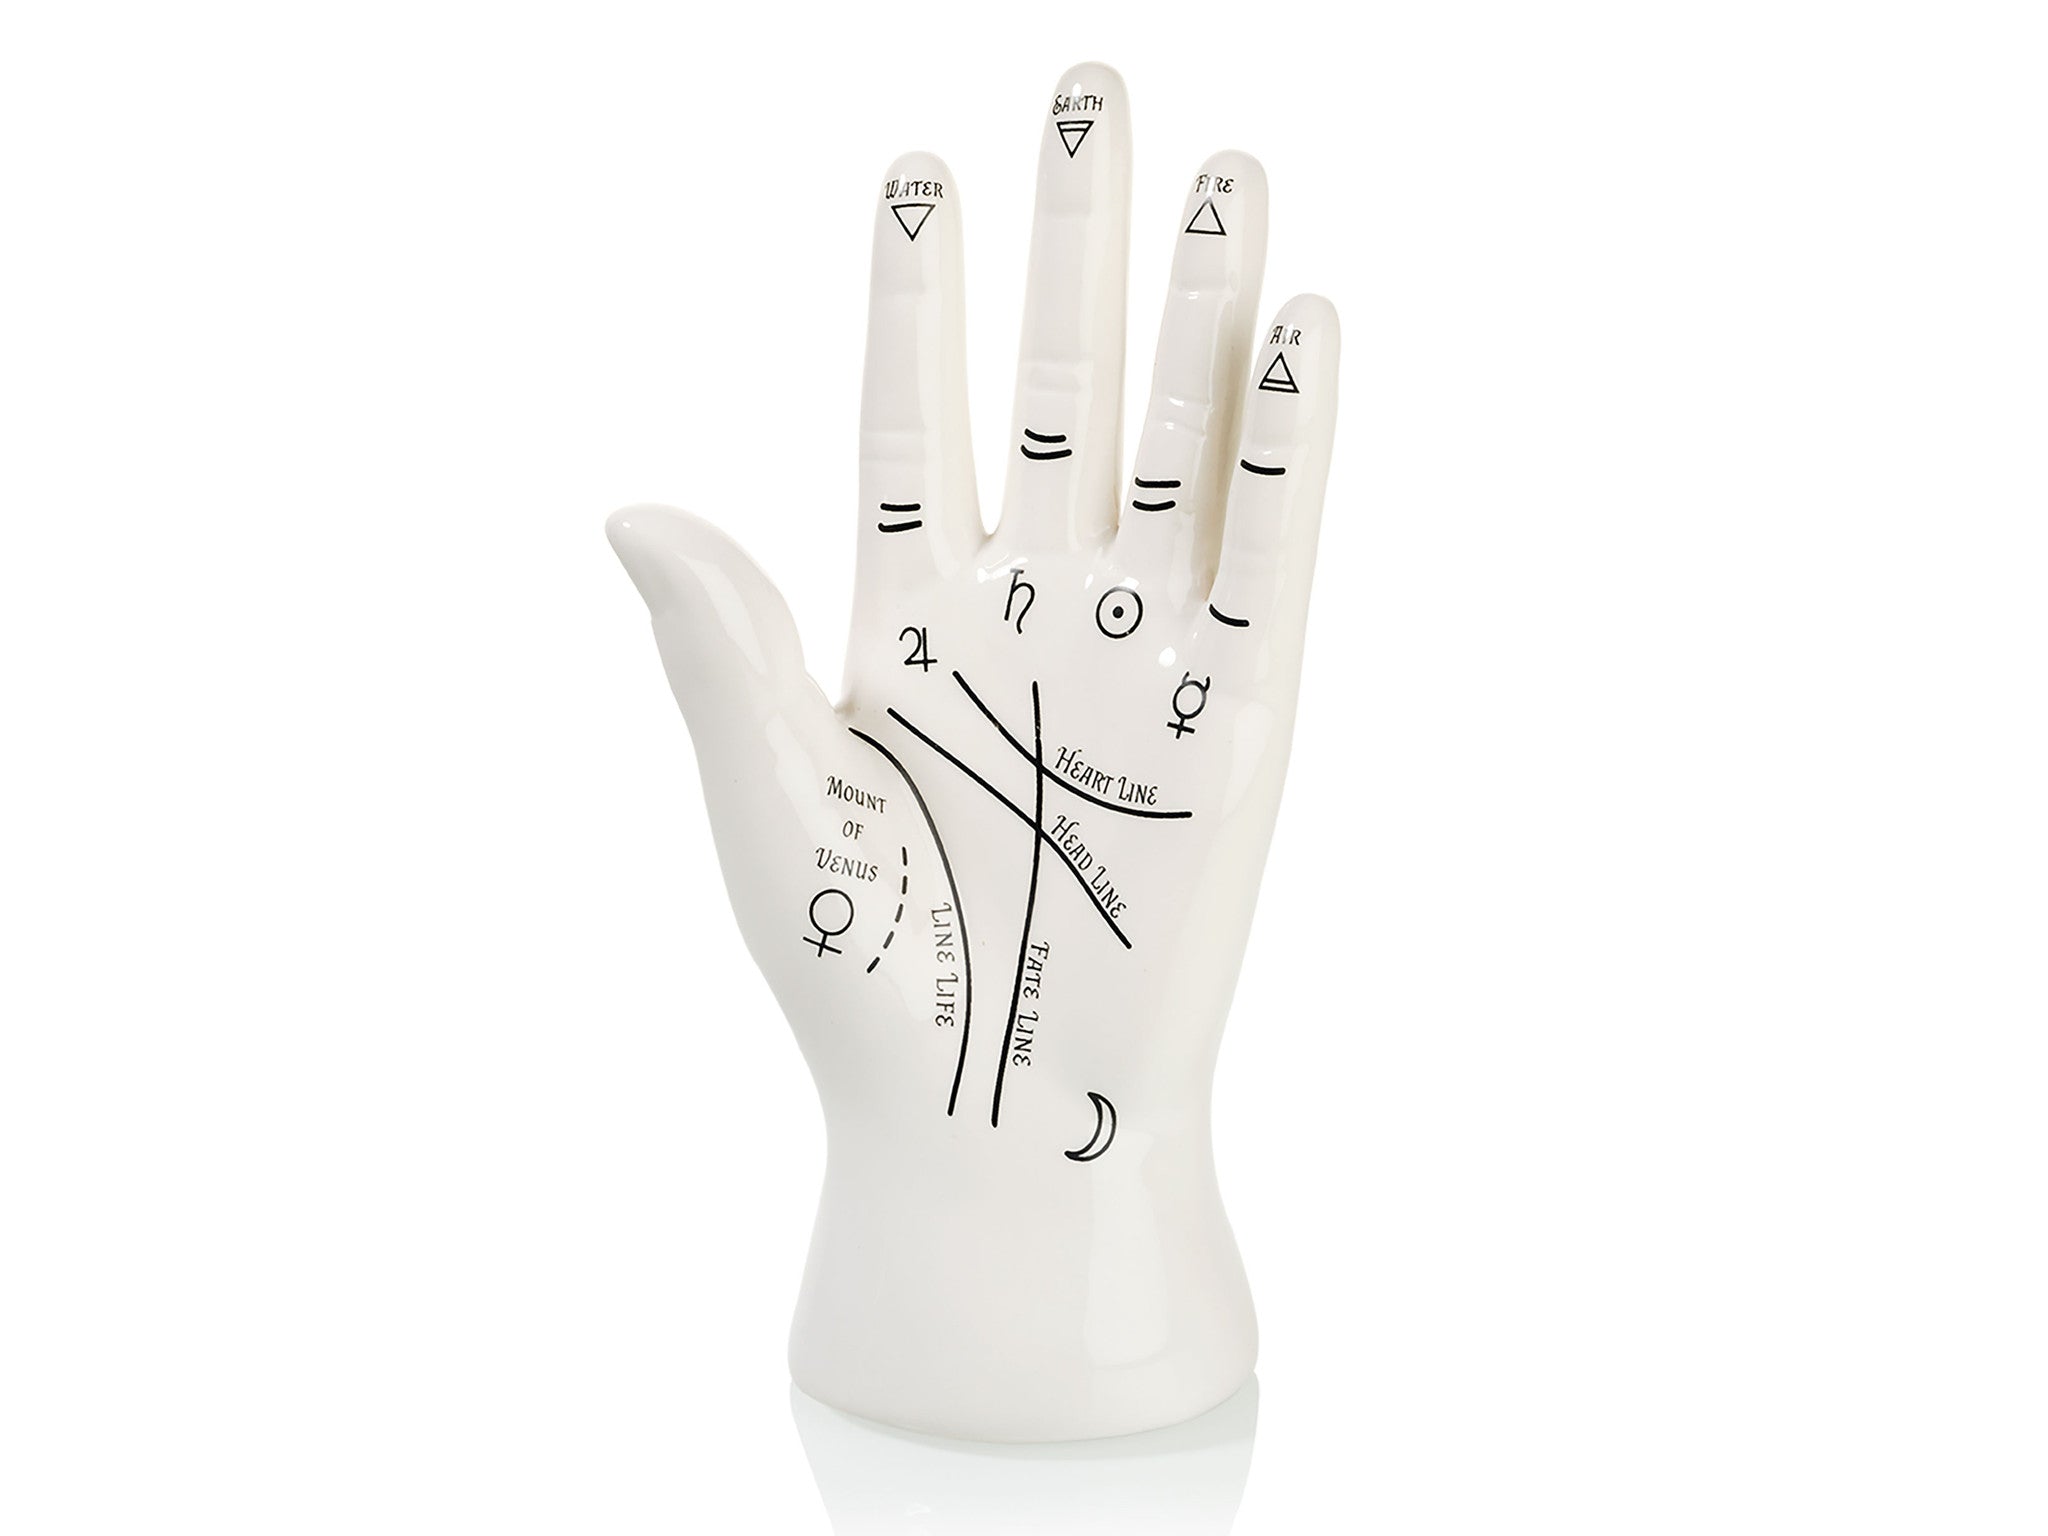 Palmistry Hand Ceramic Ring Holder